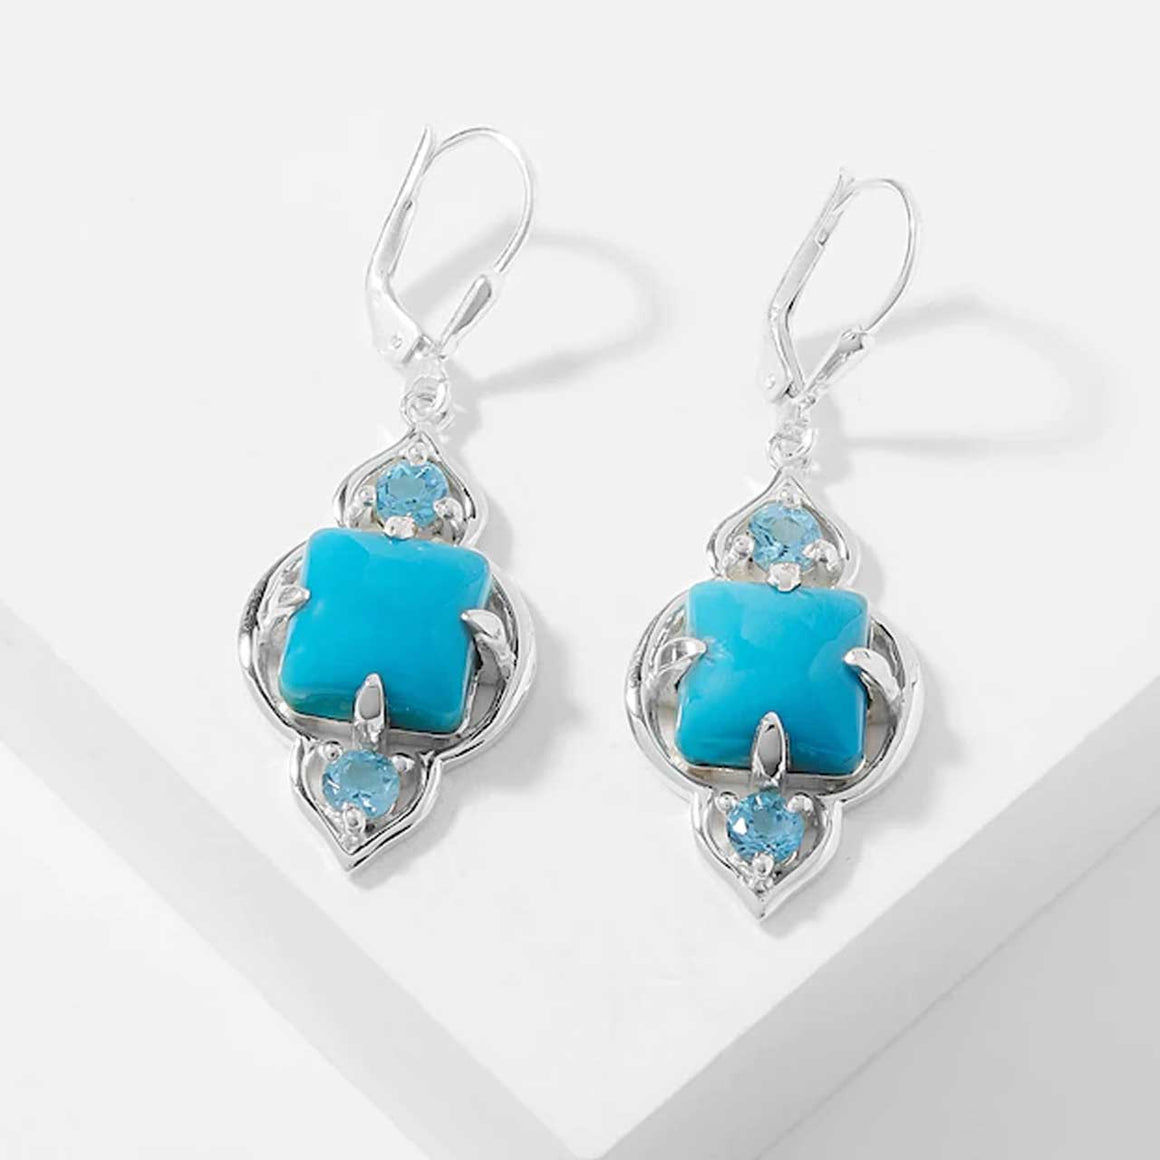 Sleeping Beauty Turquoise and Swiss Blue Topaz Earrings